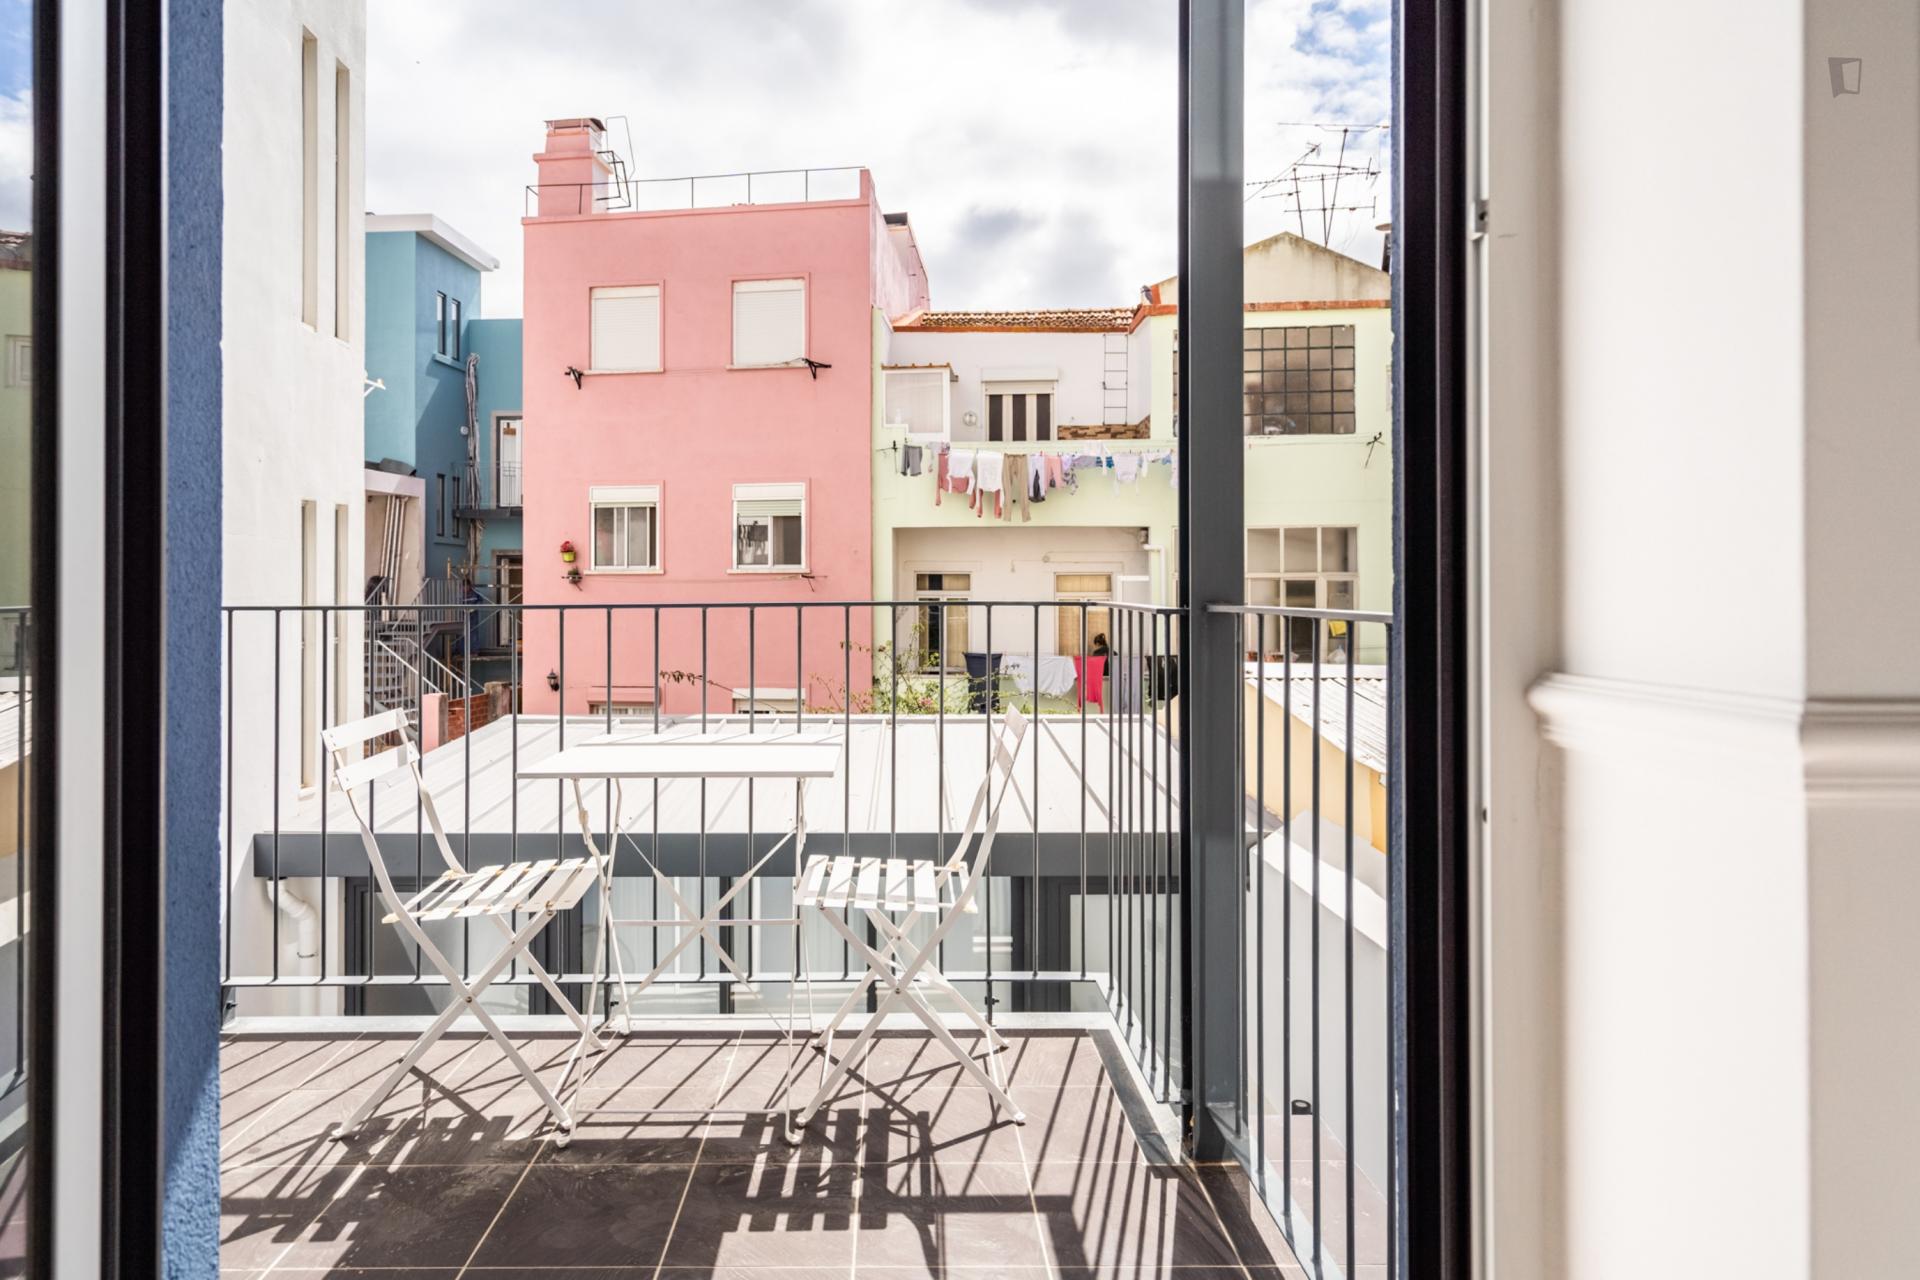 Barbadinhos - 2-bedroom apartment in Lisbon